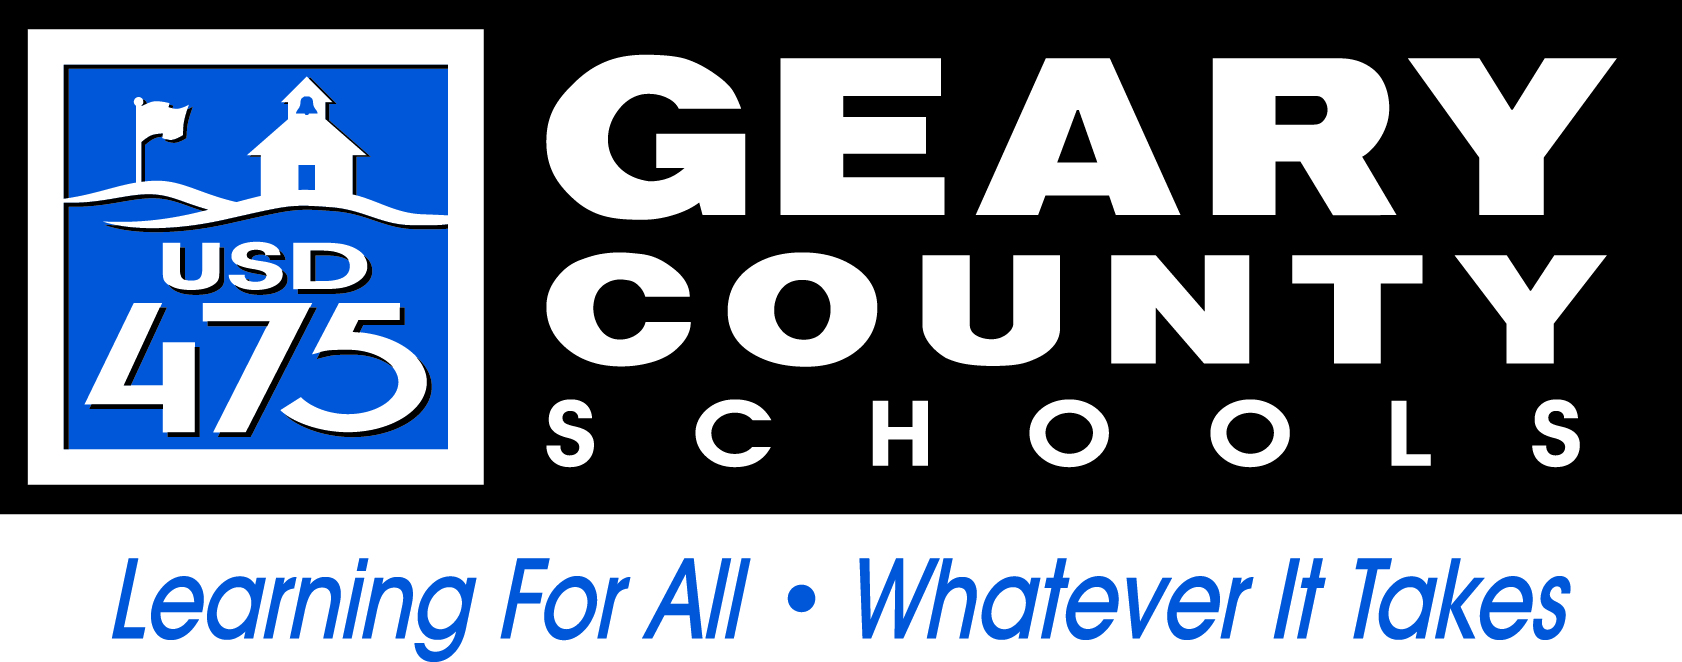 Geary County Schools USD 475 Logo